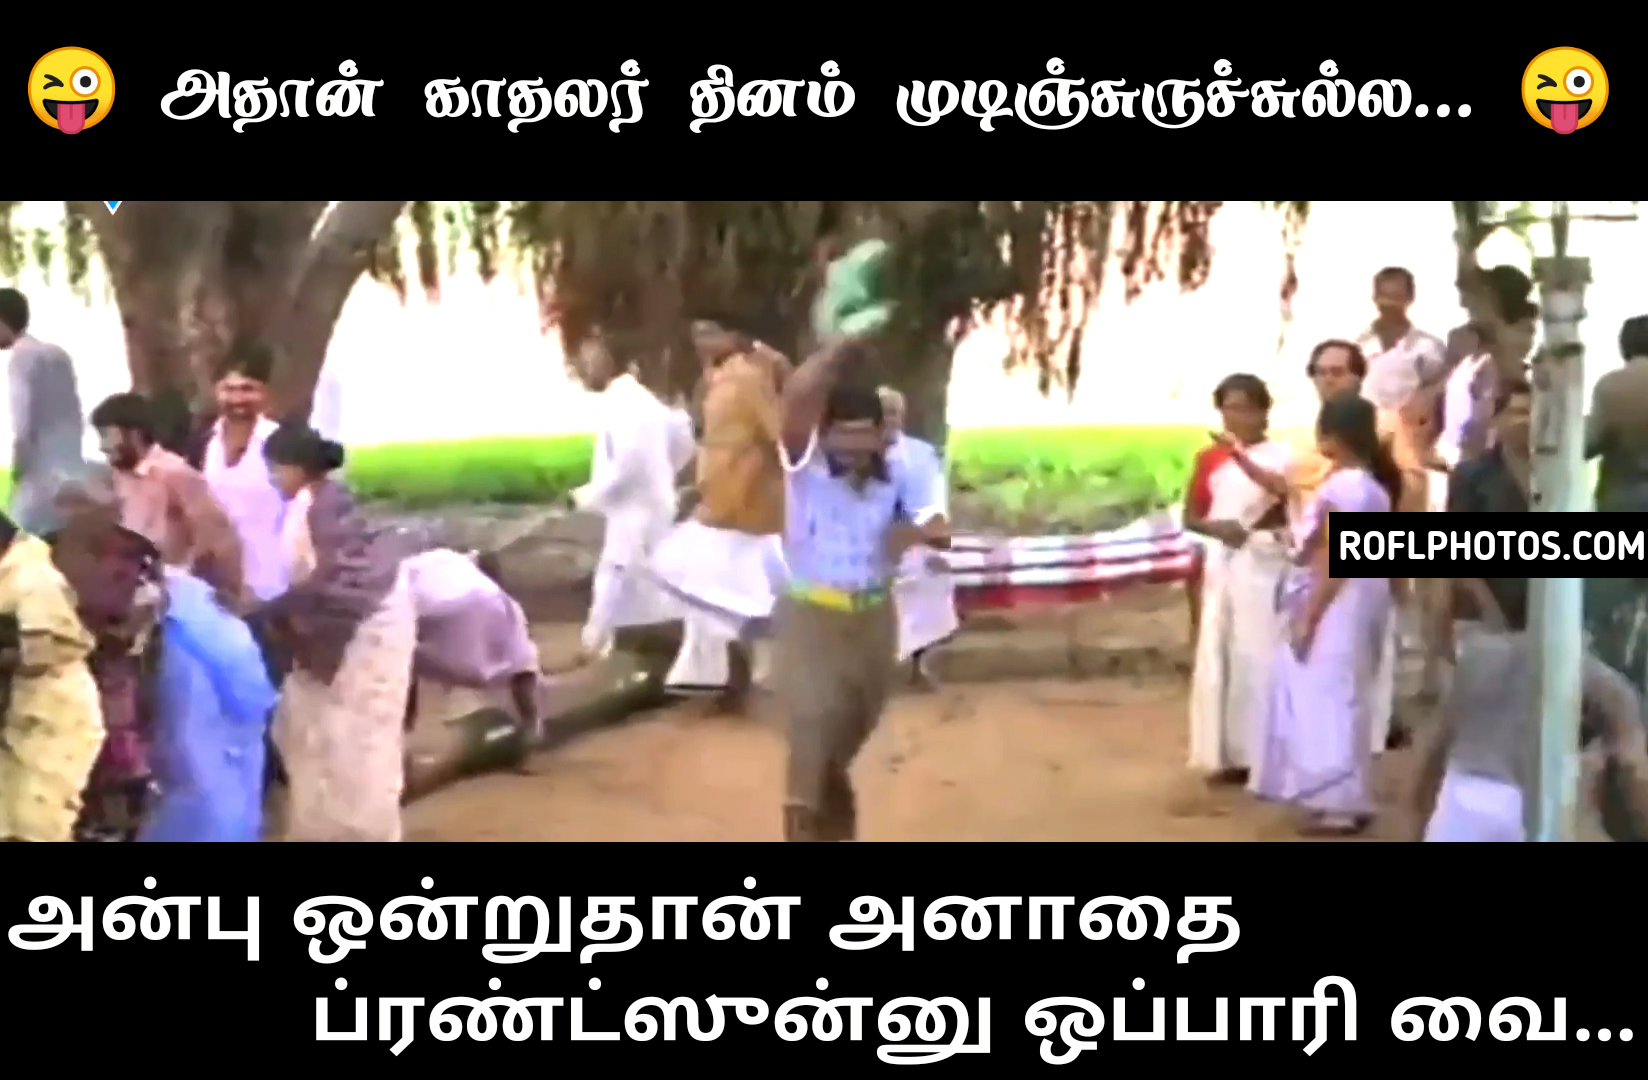 Tamil Comedy Memes: Vadivelu Memes Images | Vadivelu Comedy Memes Download  | Tamil Funny Images With Dialogues | Tamil Photo Comments Download | Tamil  Comedy Images With Commants | Tamil Dialogues With